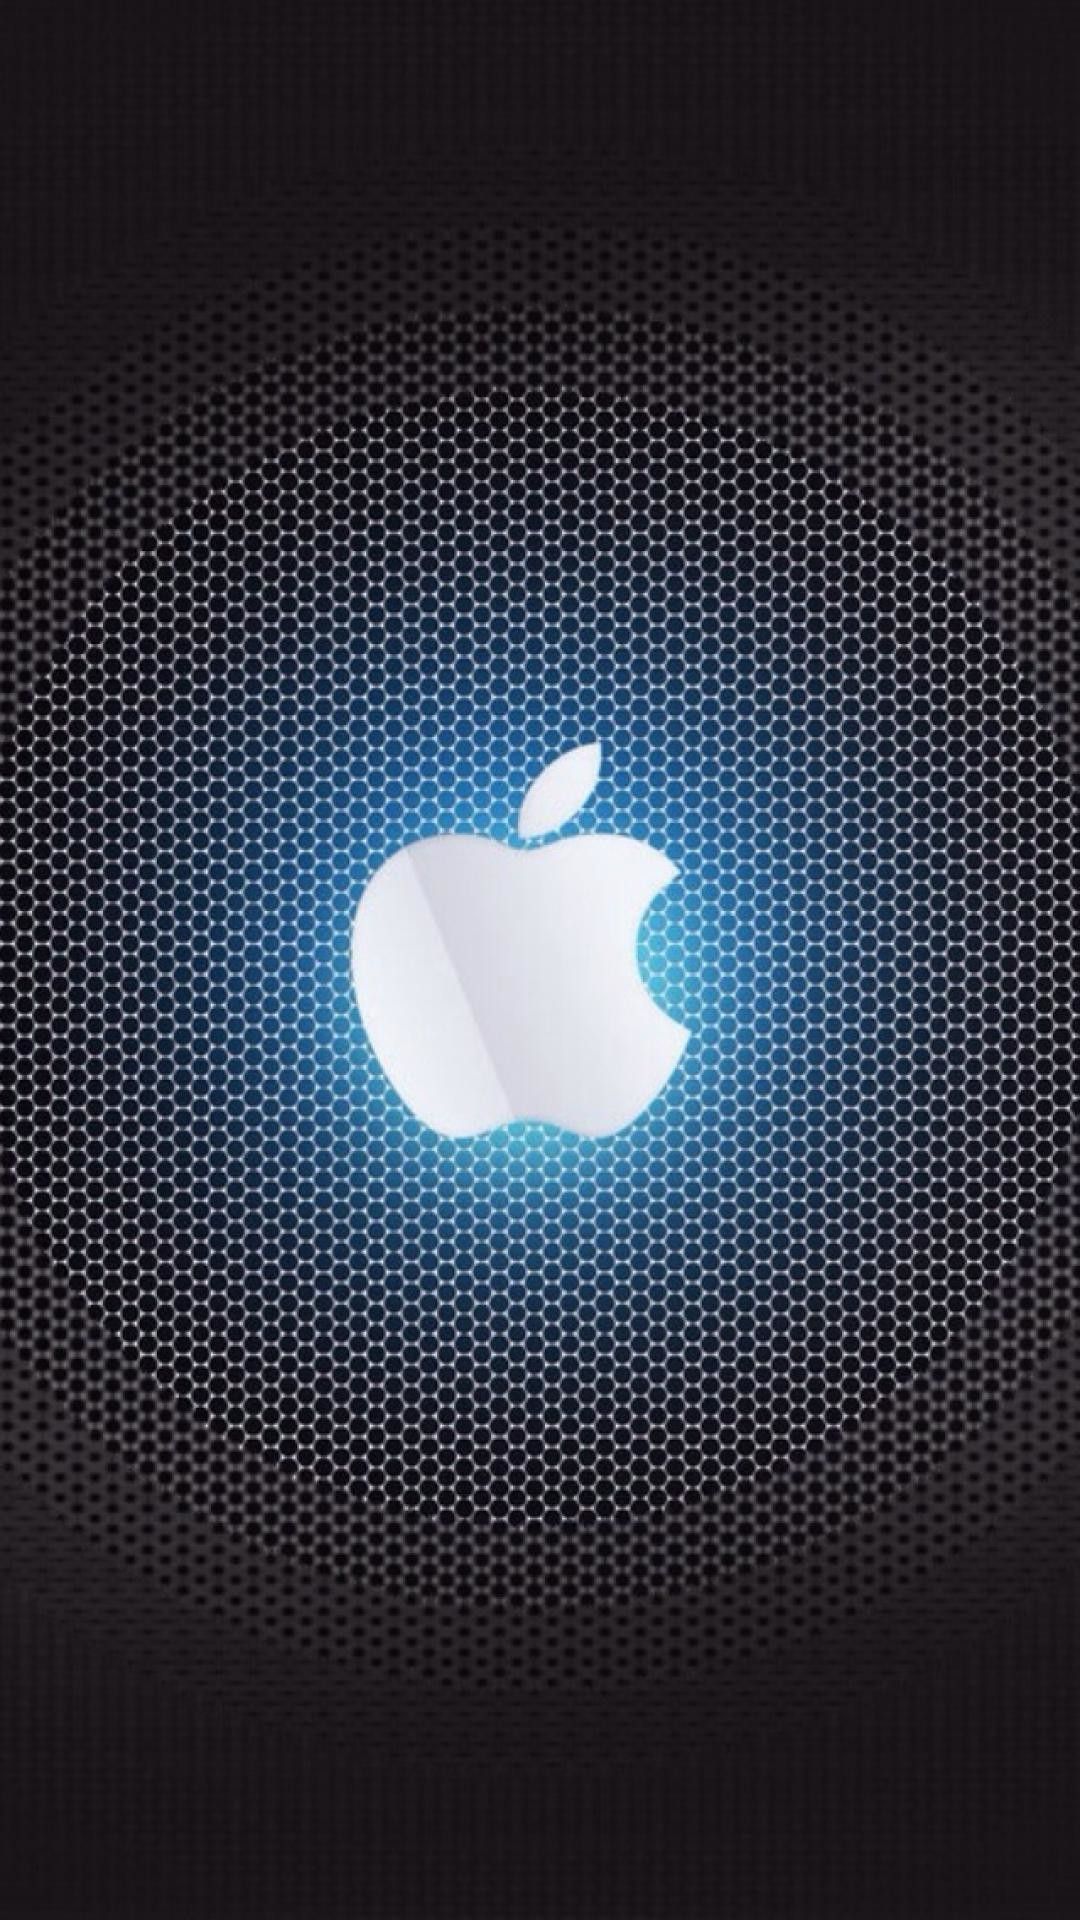 wallpaper for desktop, laptop | ng08-apple-logo-blue-orange-dark